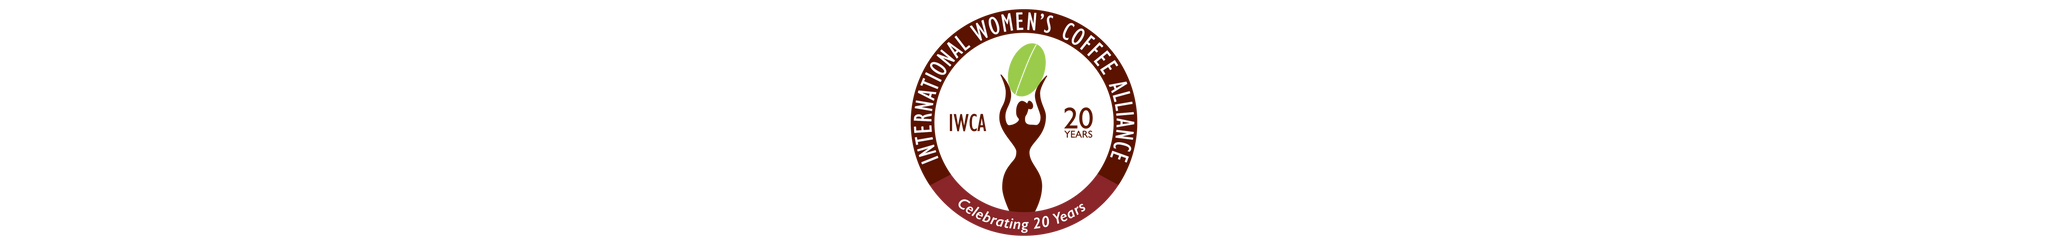 International Women’s Coffee Alliance logo